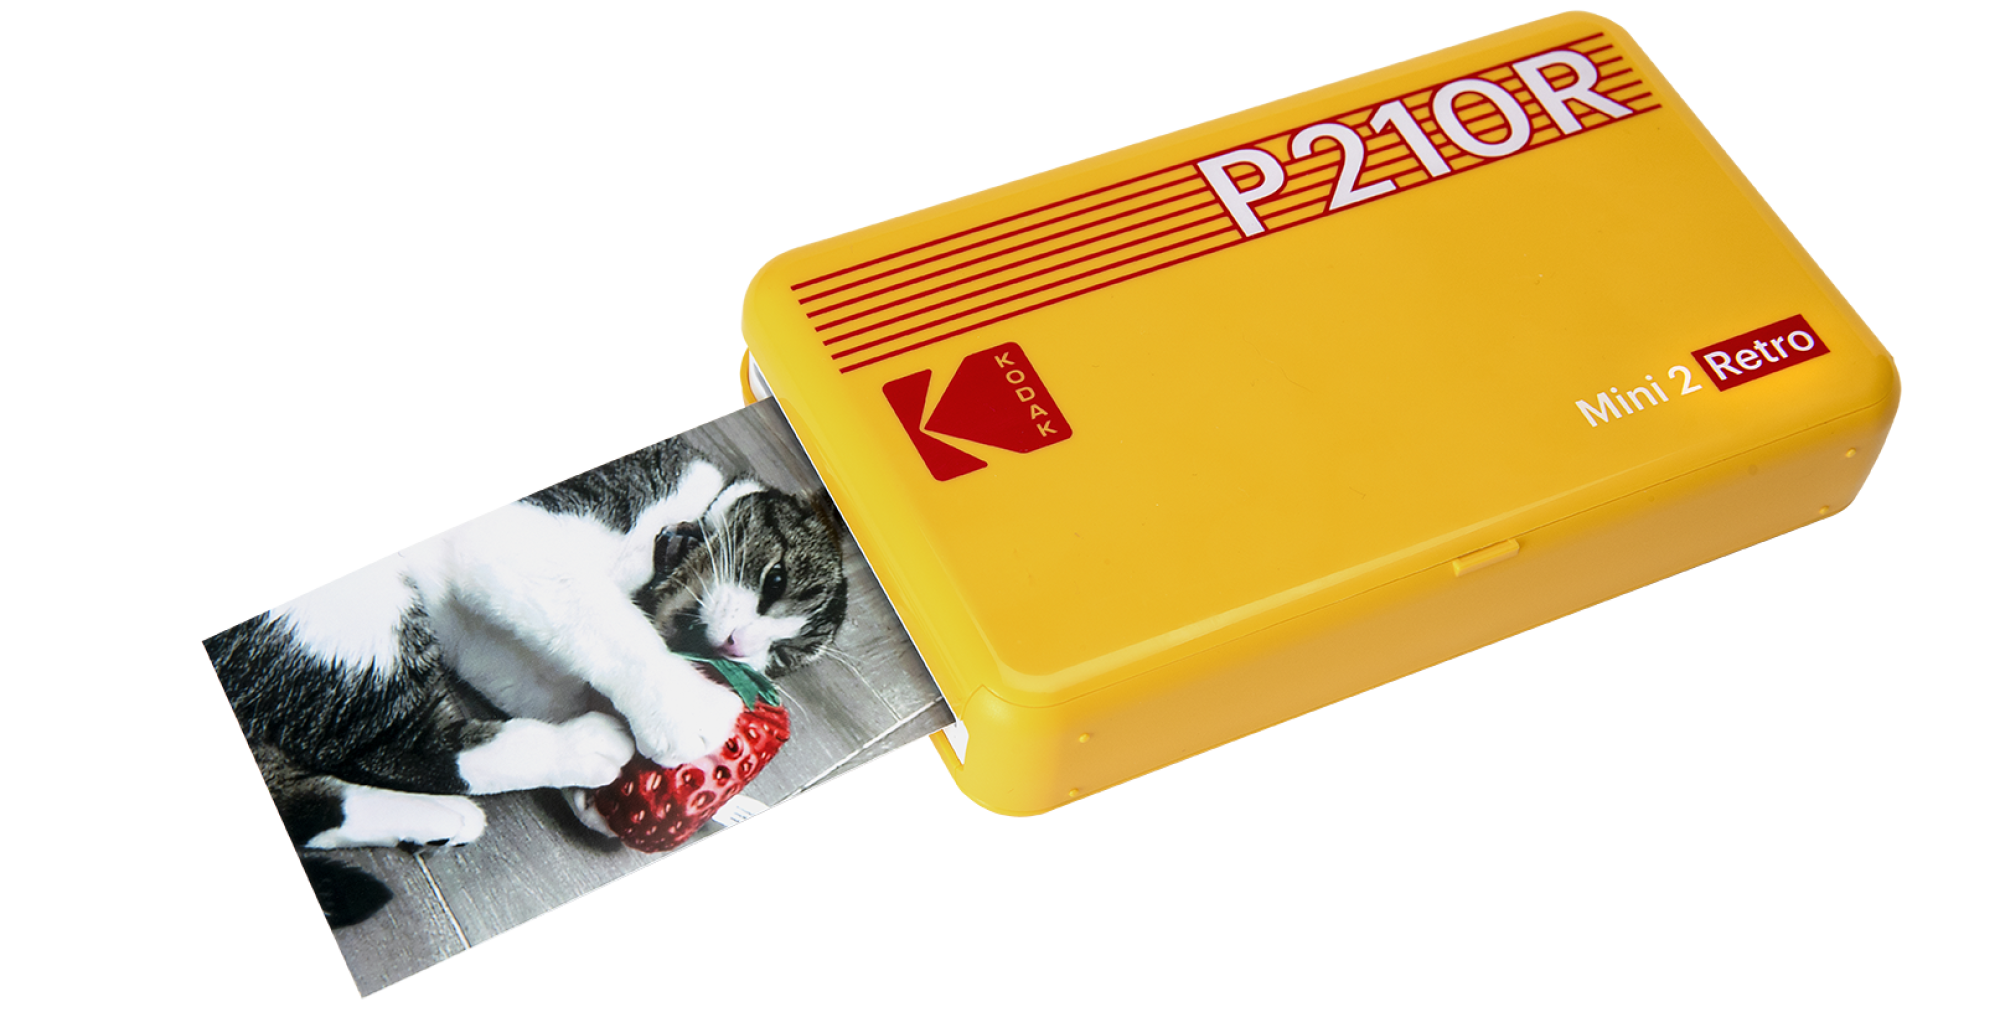 An image of a cat printed from the Kodak Mini 2 Retro 4Pass portable photo printer